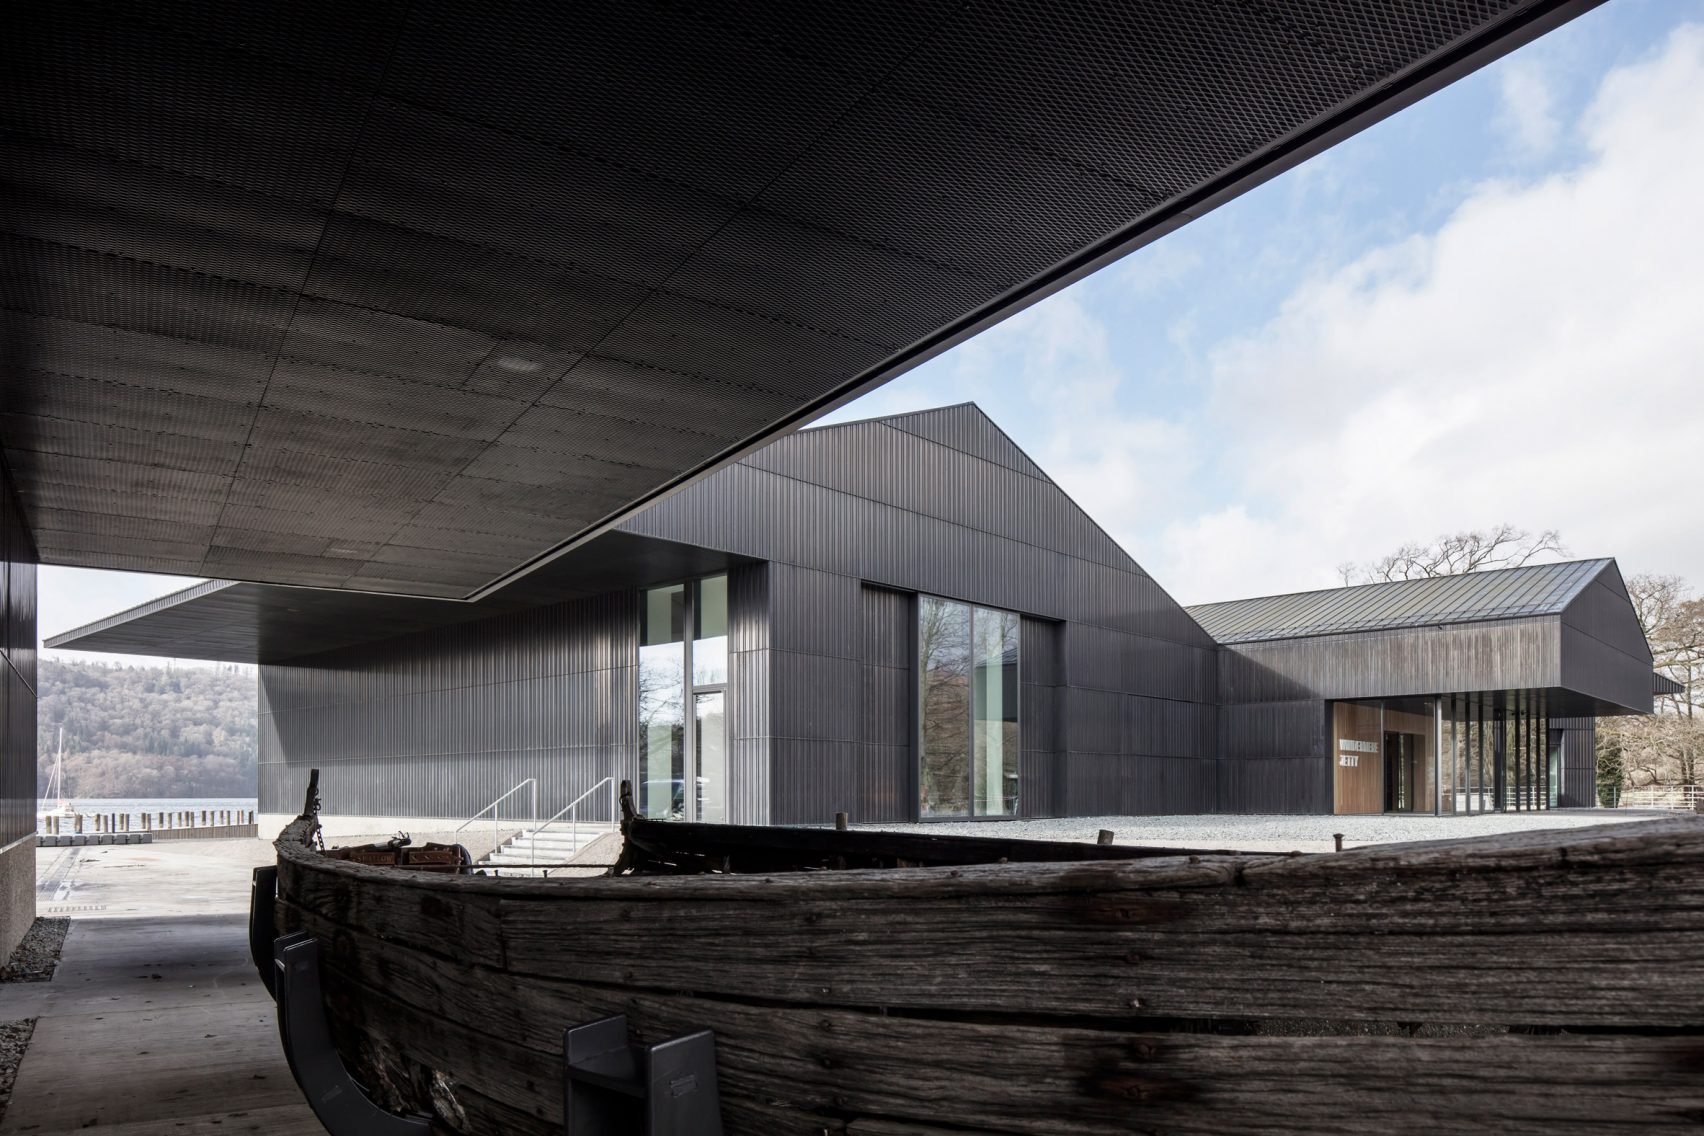 windermere-jetty-museum-carmody-groarke-architecture-cultural-england-uk_dezeen_2364_col_0-1704x1136.jpeg